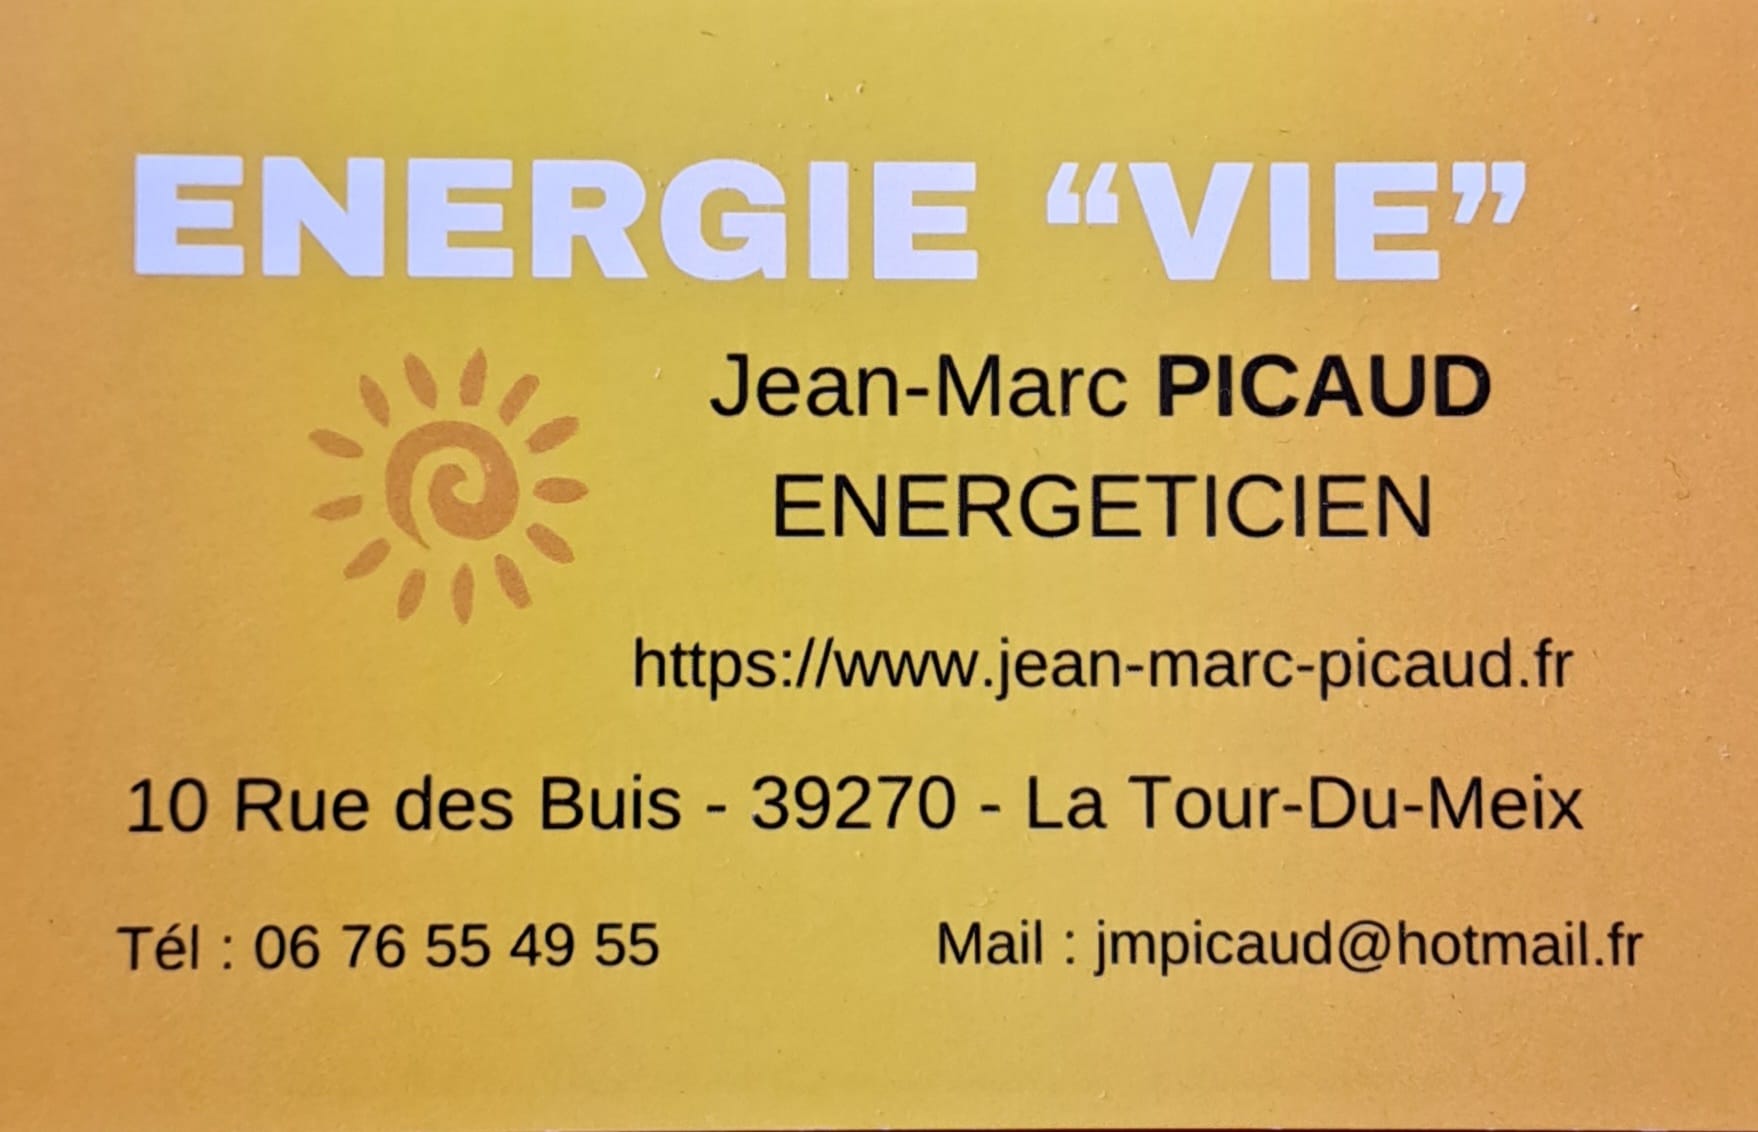 Énergie vie Jean Marc Picaud